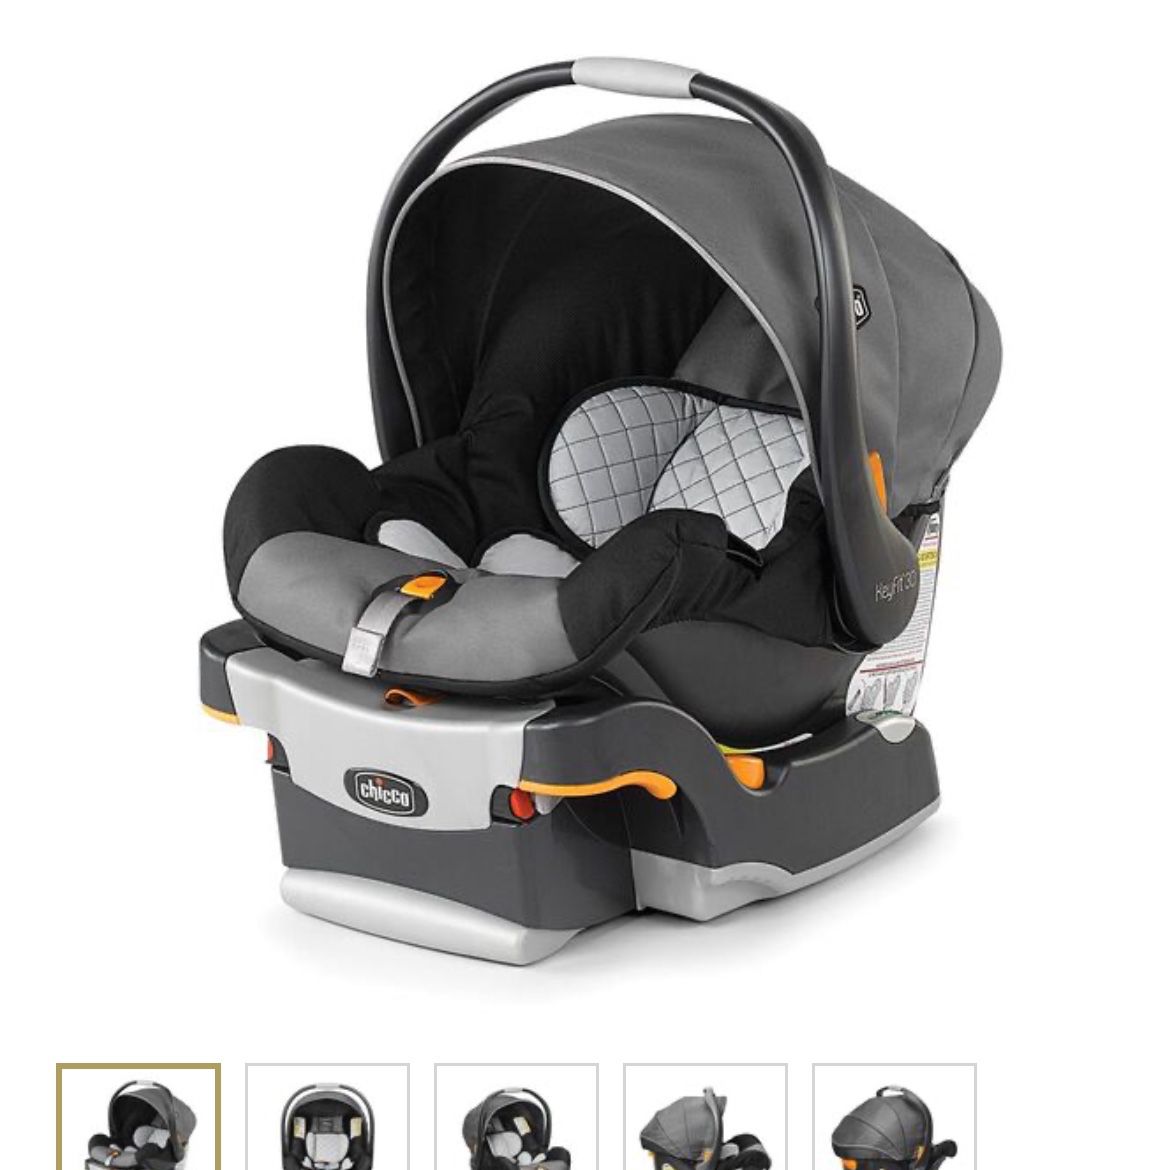 KeyFit 30 Infant Car Seat and Base